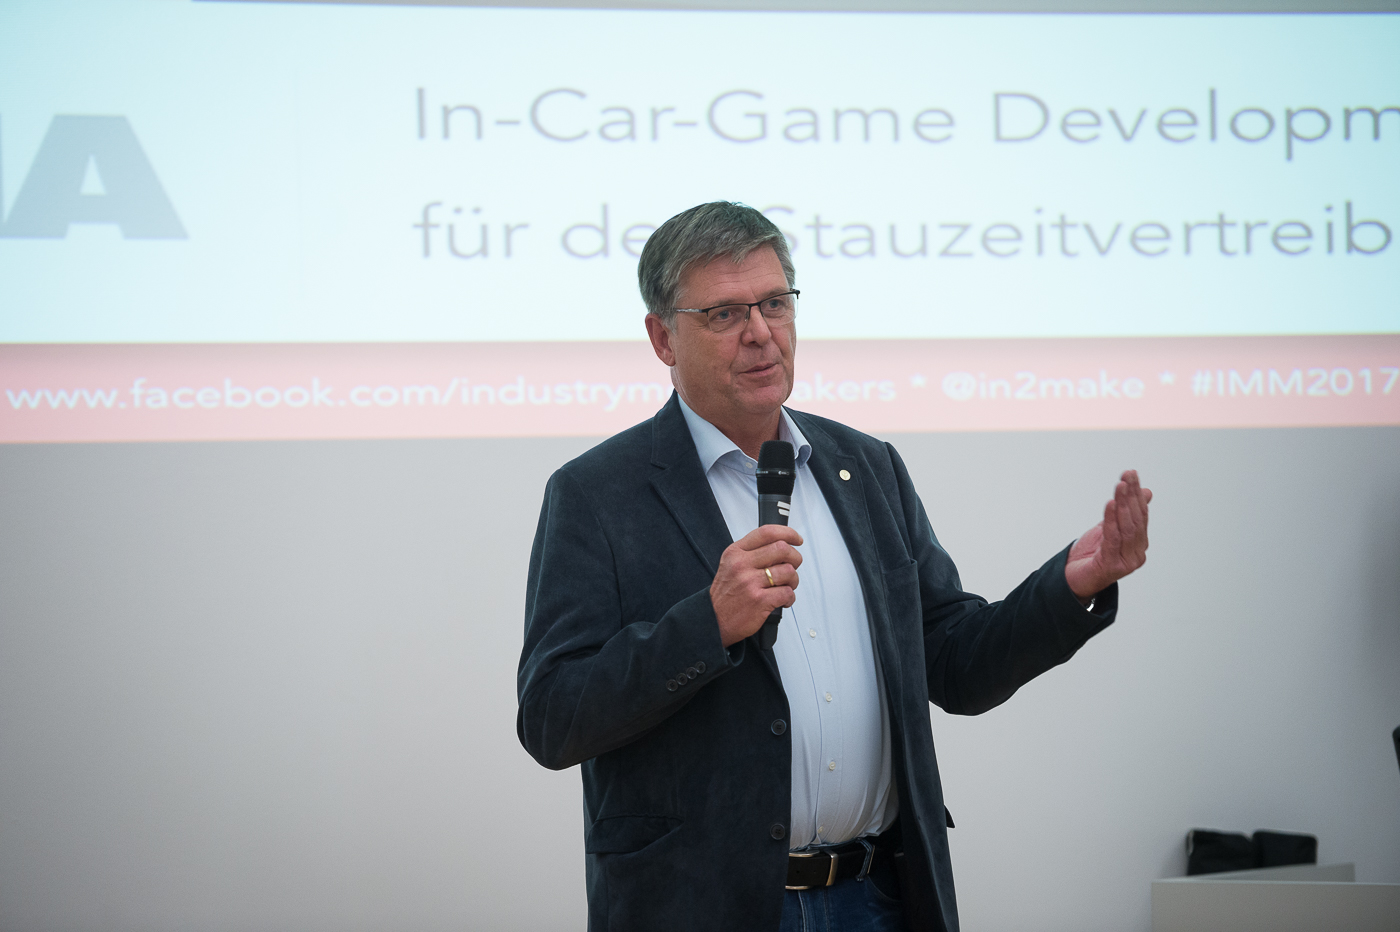 Briefing: In-car Game Development